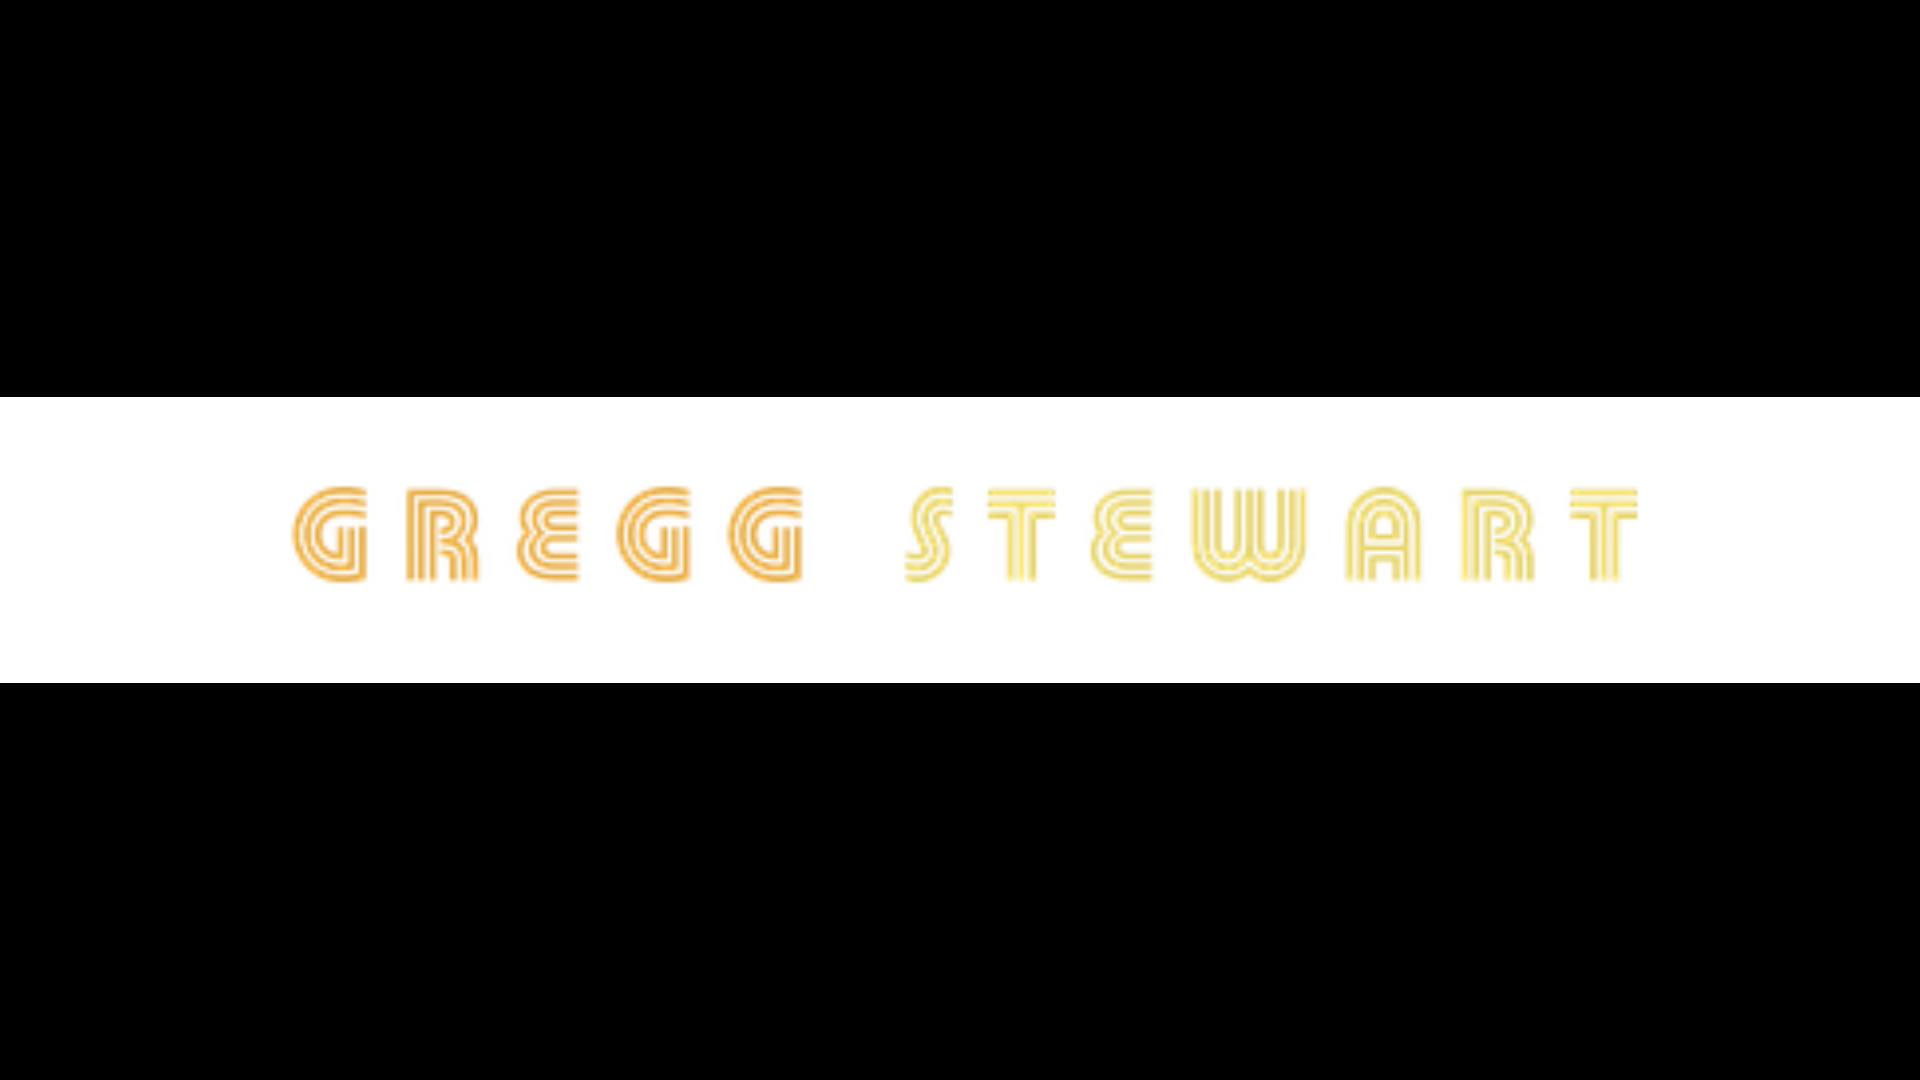  Gregg Stewart – “Starman”